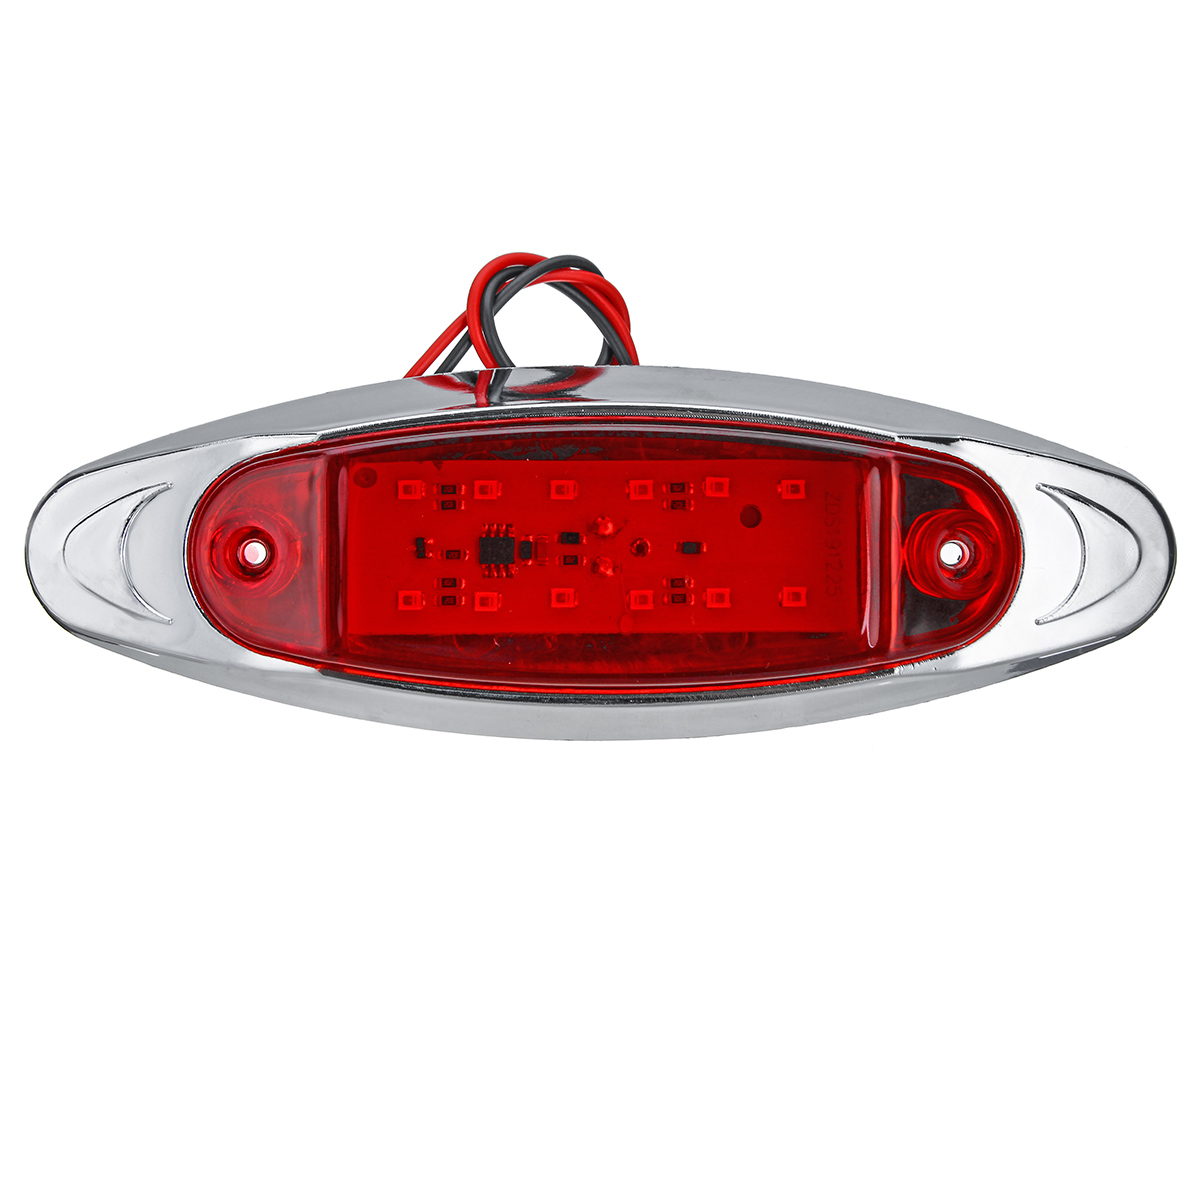 24V LED Side Marker Light Flash Strobe Lámpara de advertencia de emergencia para barco, coche, camión, remolque